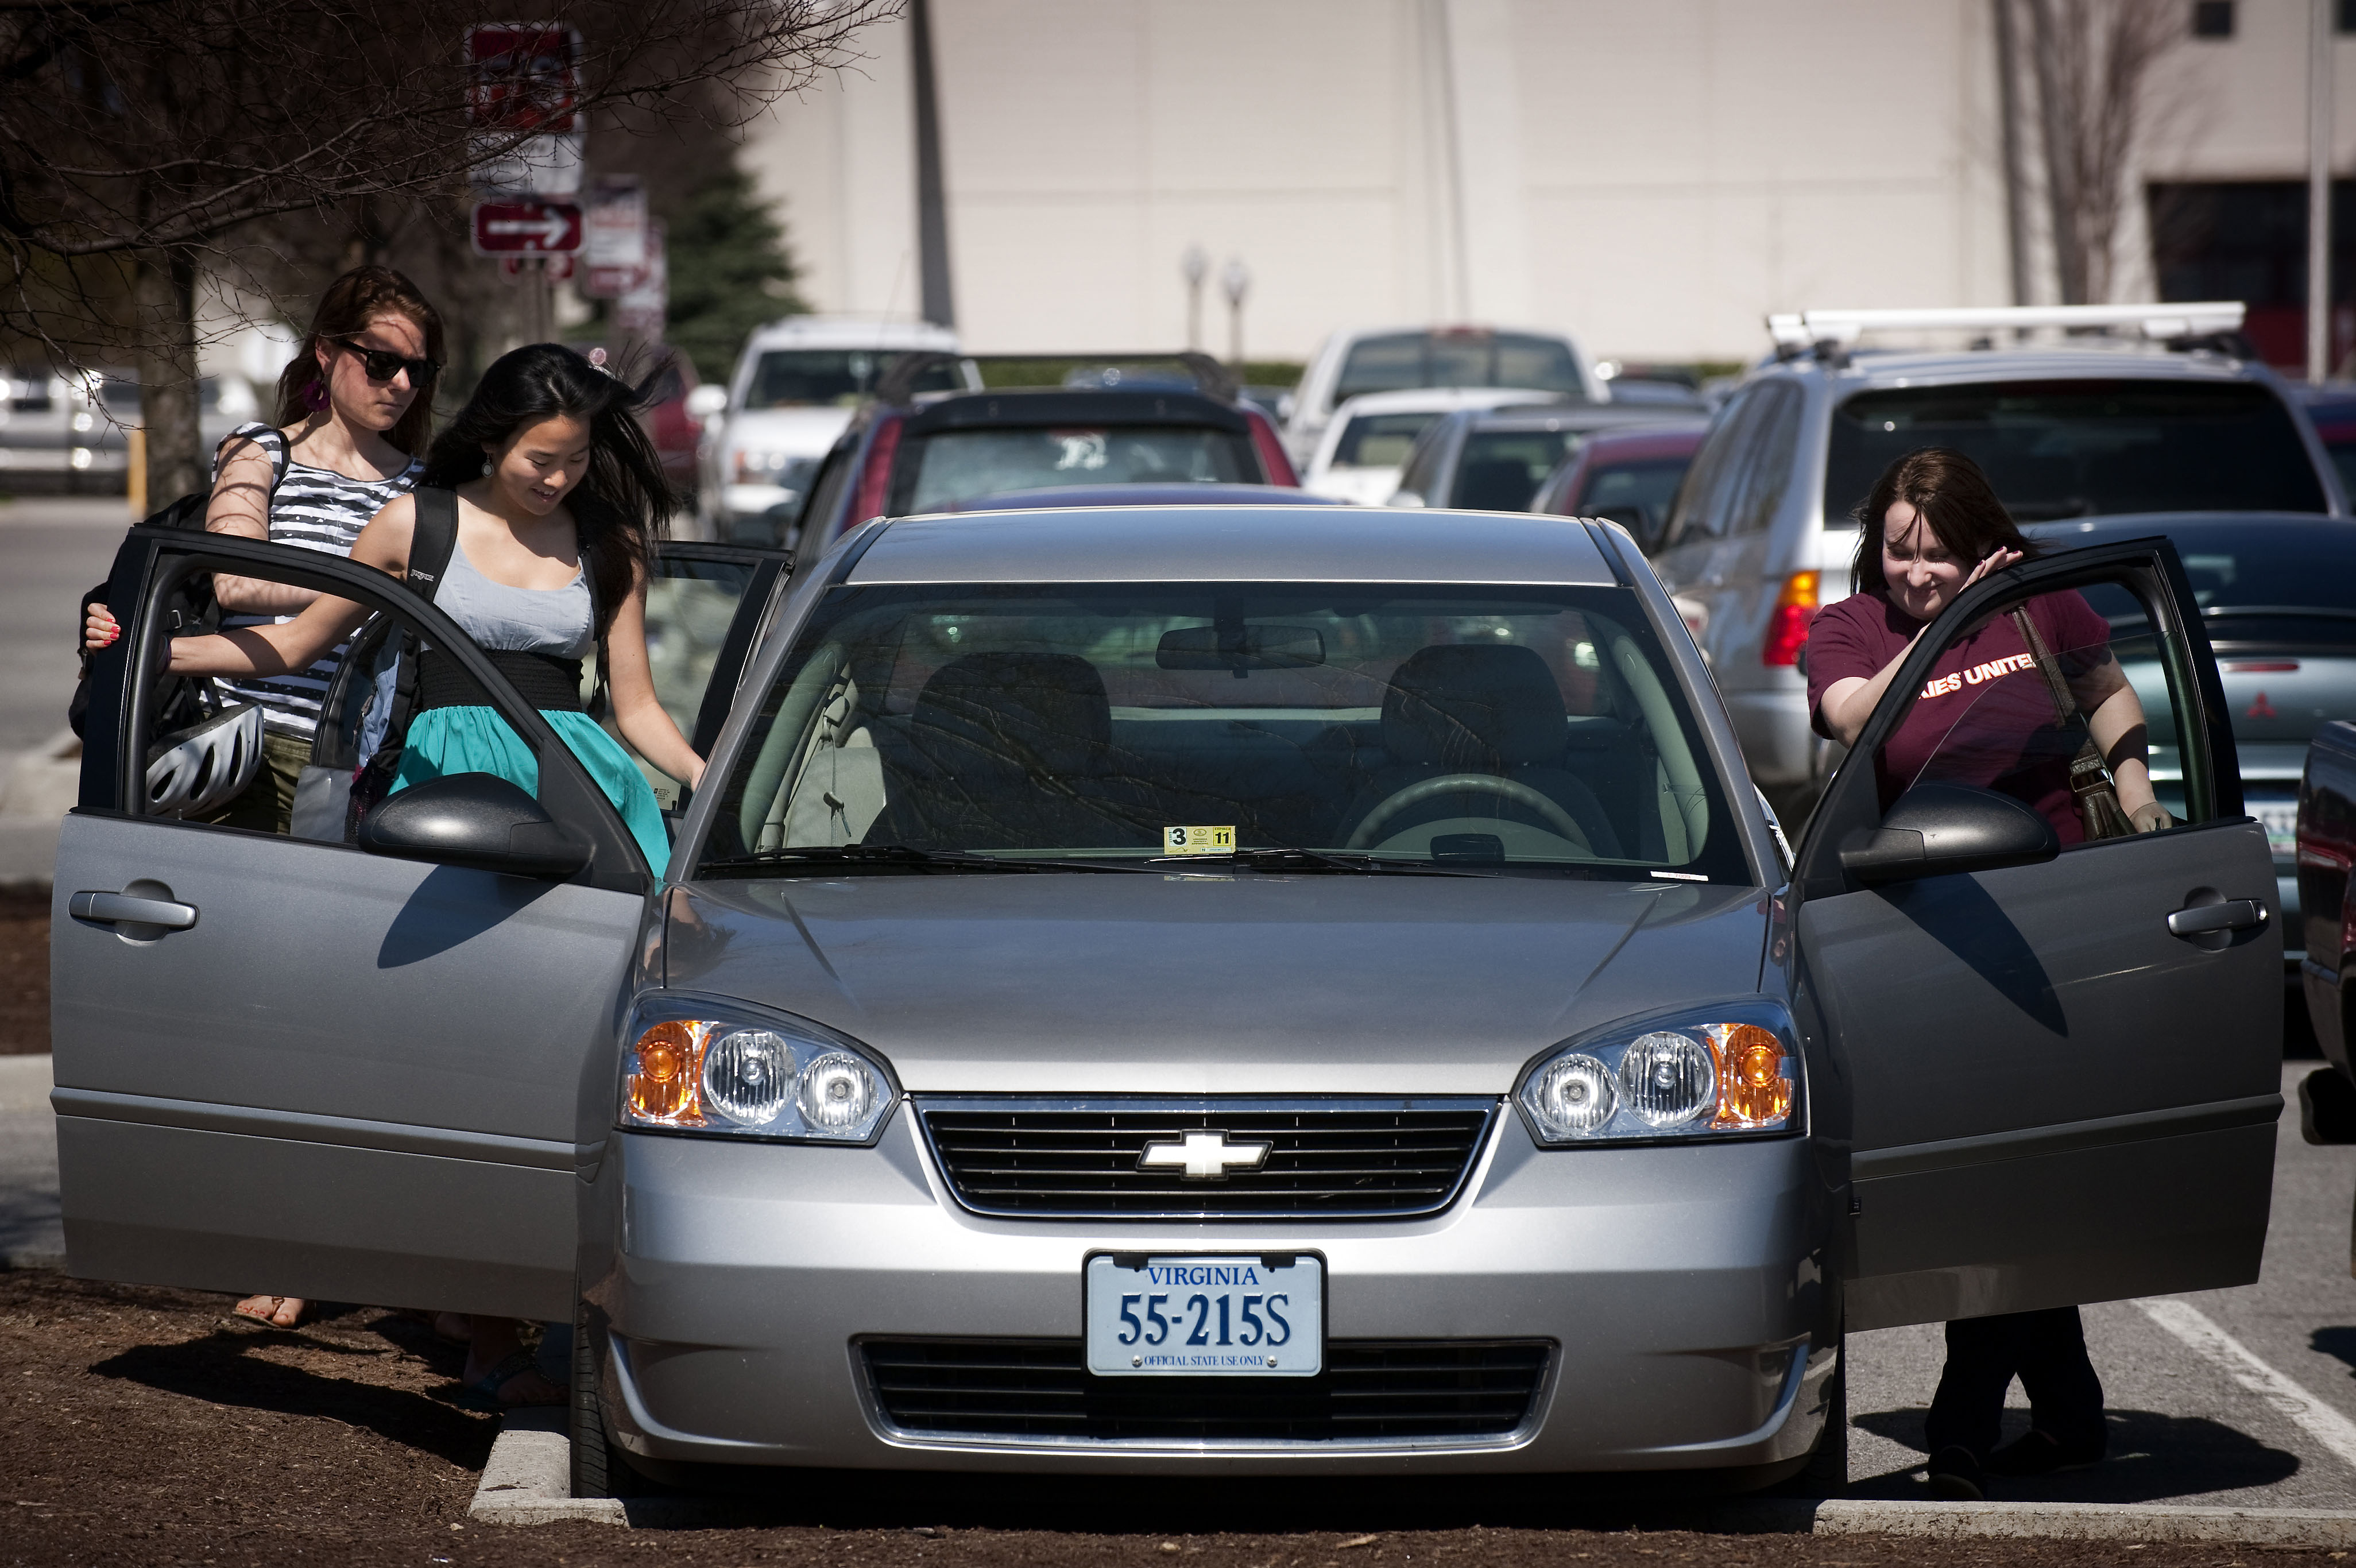 Students carpooling at Virginia Tech